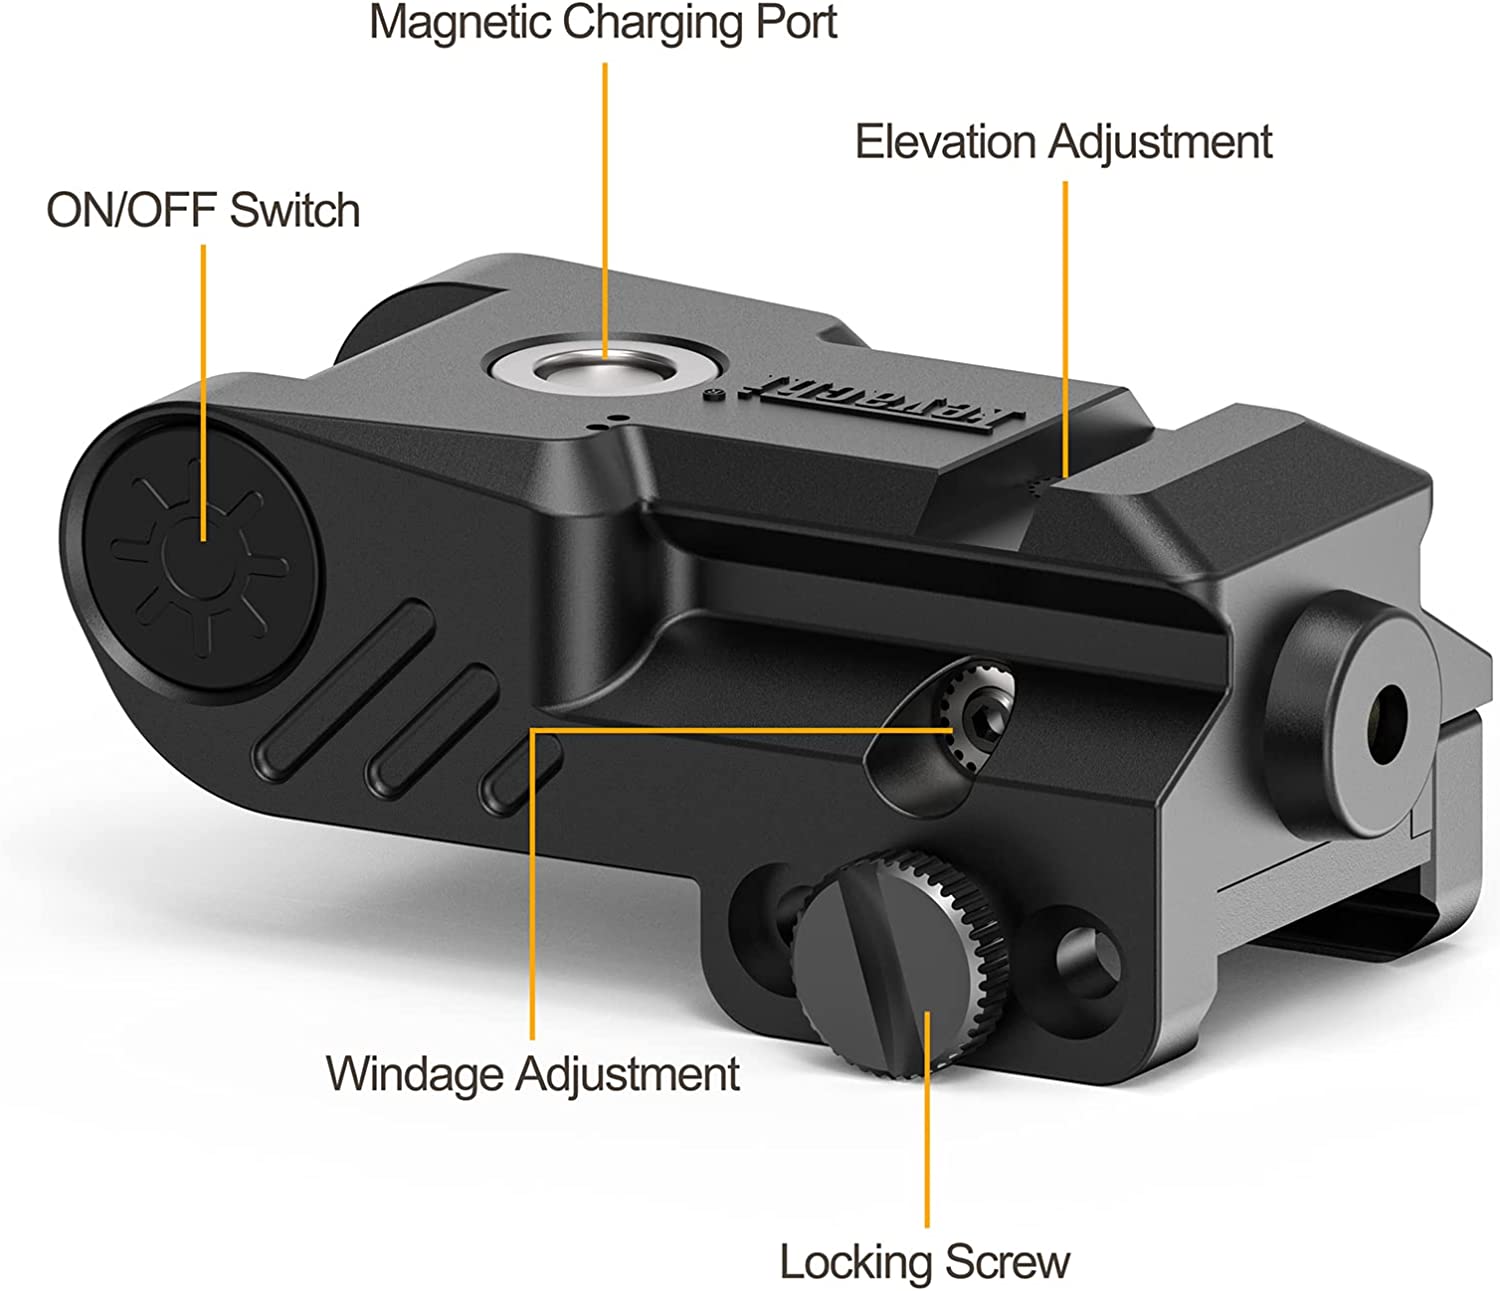 Laser vert rechargeable Feyachi LS22 - Support sur rail USB